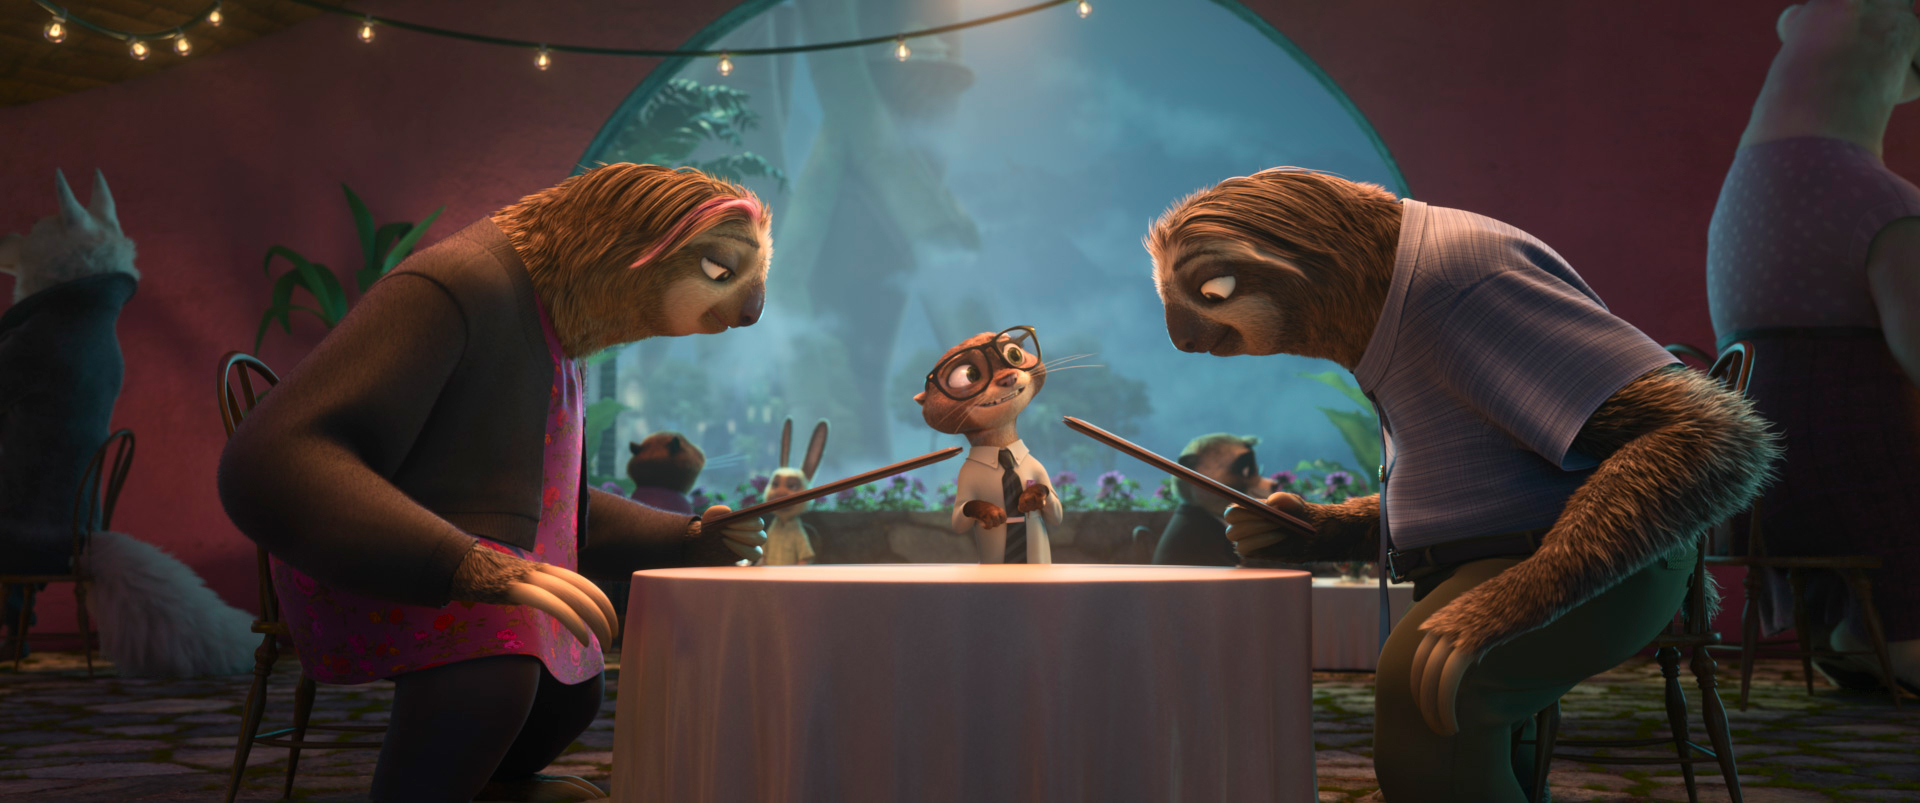 Disney+ Unveils Trailer for Walt Disney Animation Studios' Original Series ' Zootopia' - The Walt Disney Company